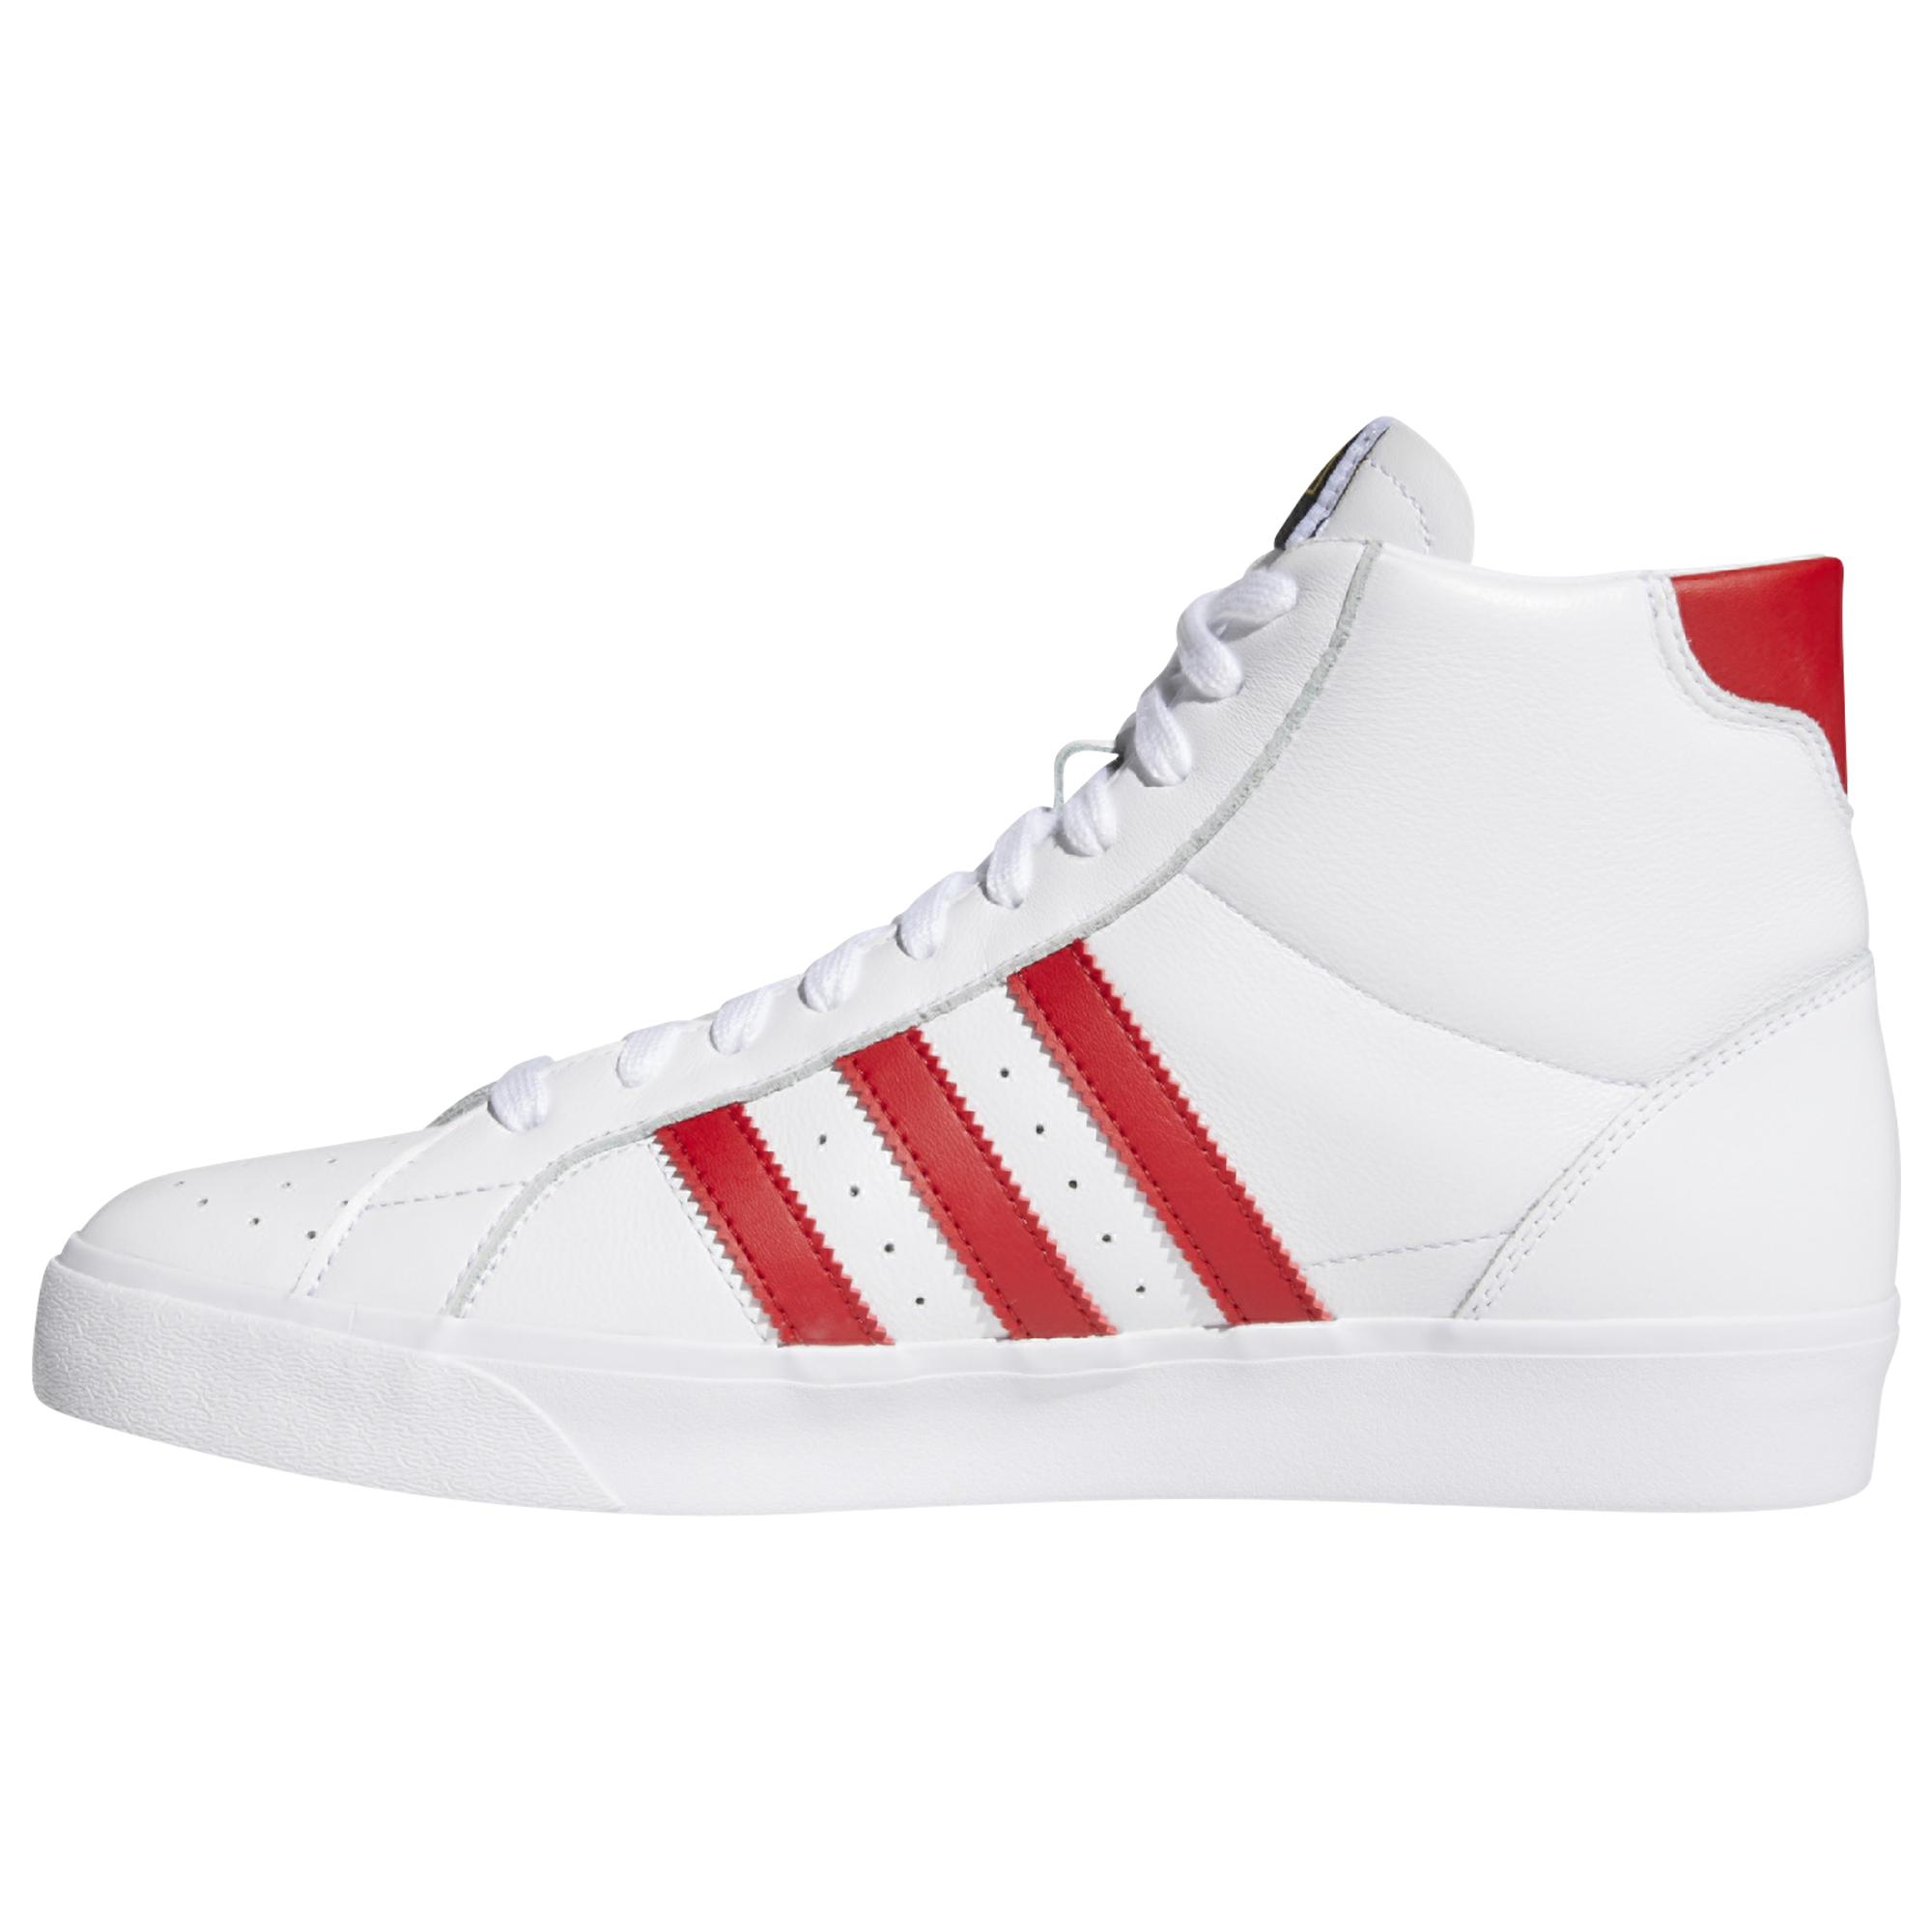 adidas Originals Leather Basket Profi - Basketball Shoes in White ...